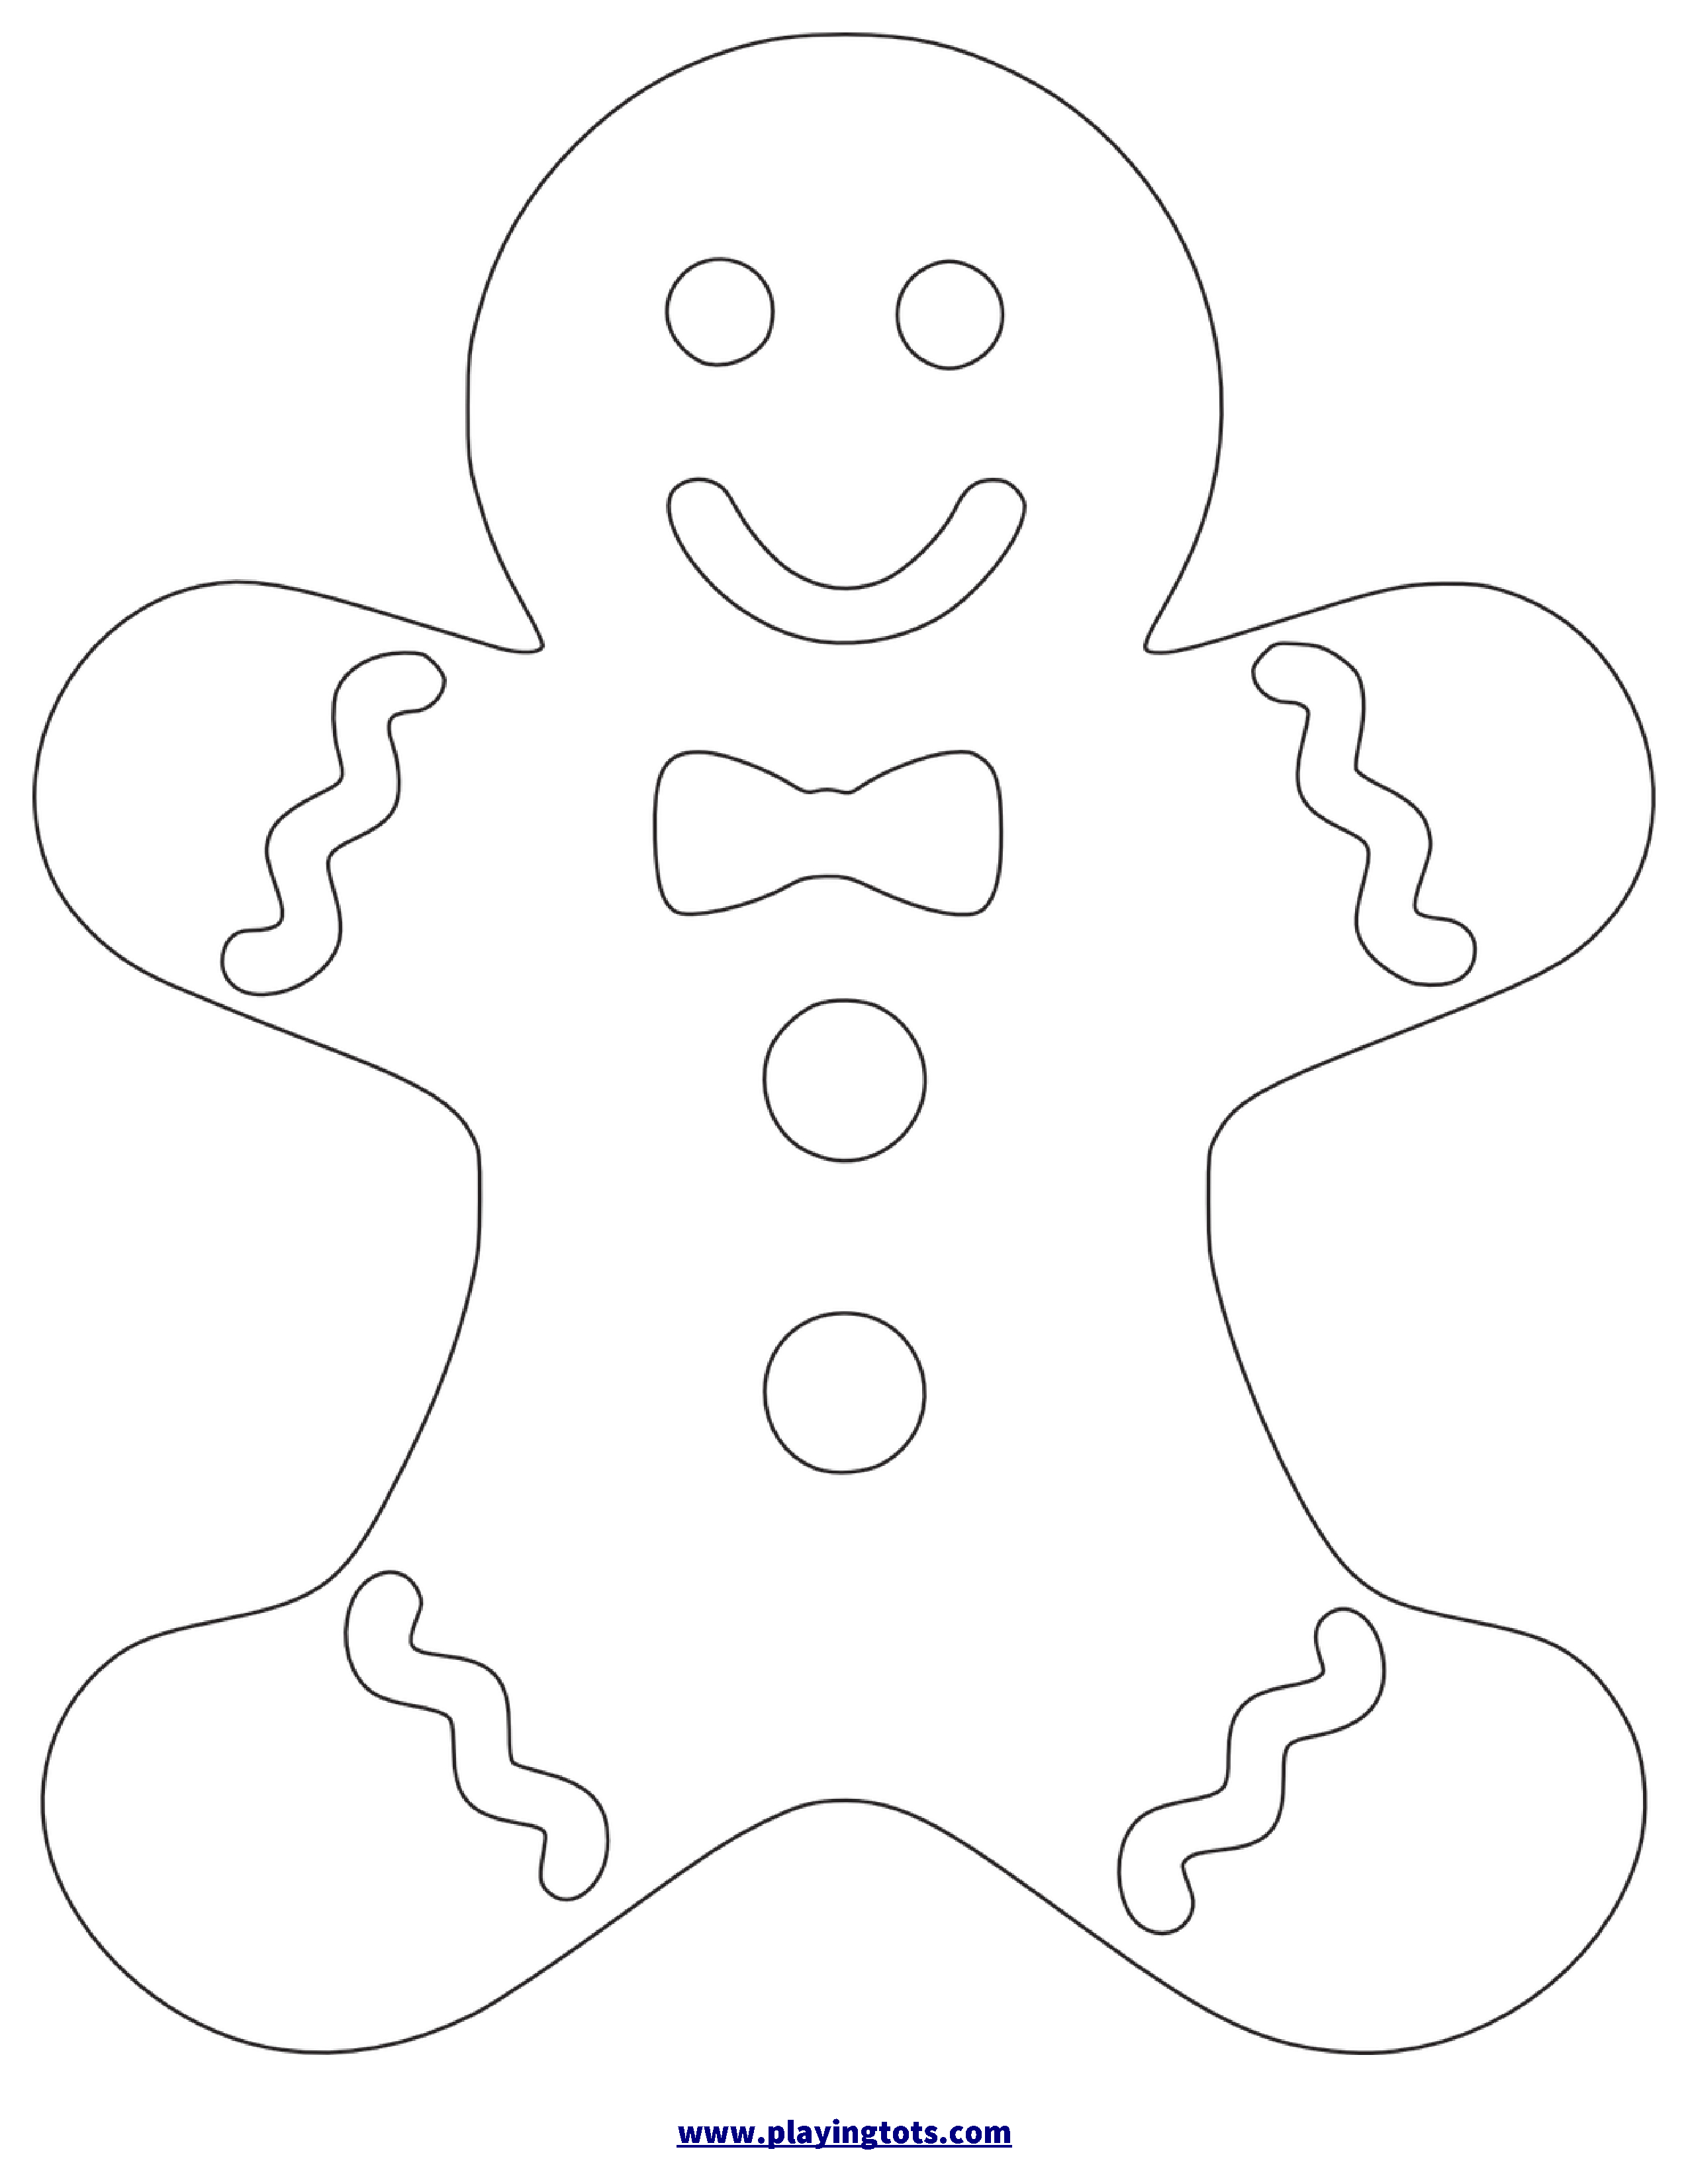 Free Printable Gingerbread Man Worksheet | Christmas Crafts - Gingerbread Template Free Printable